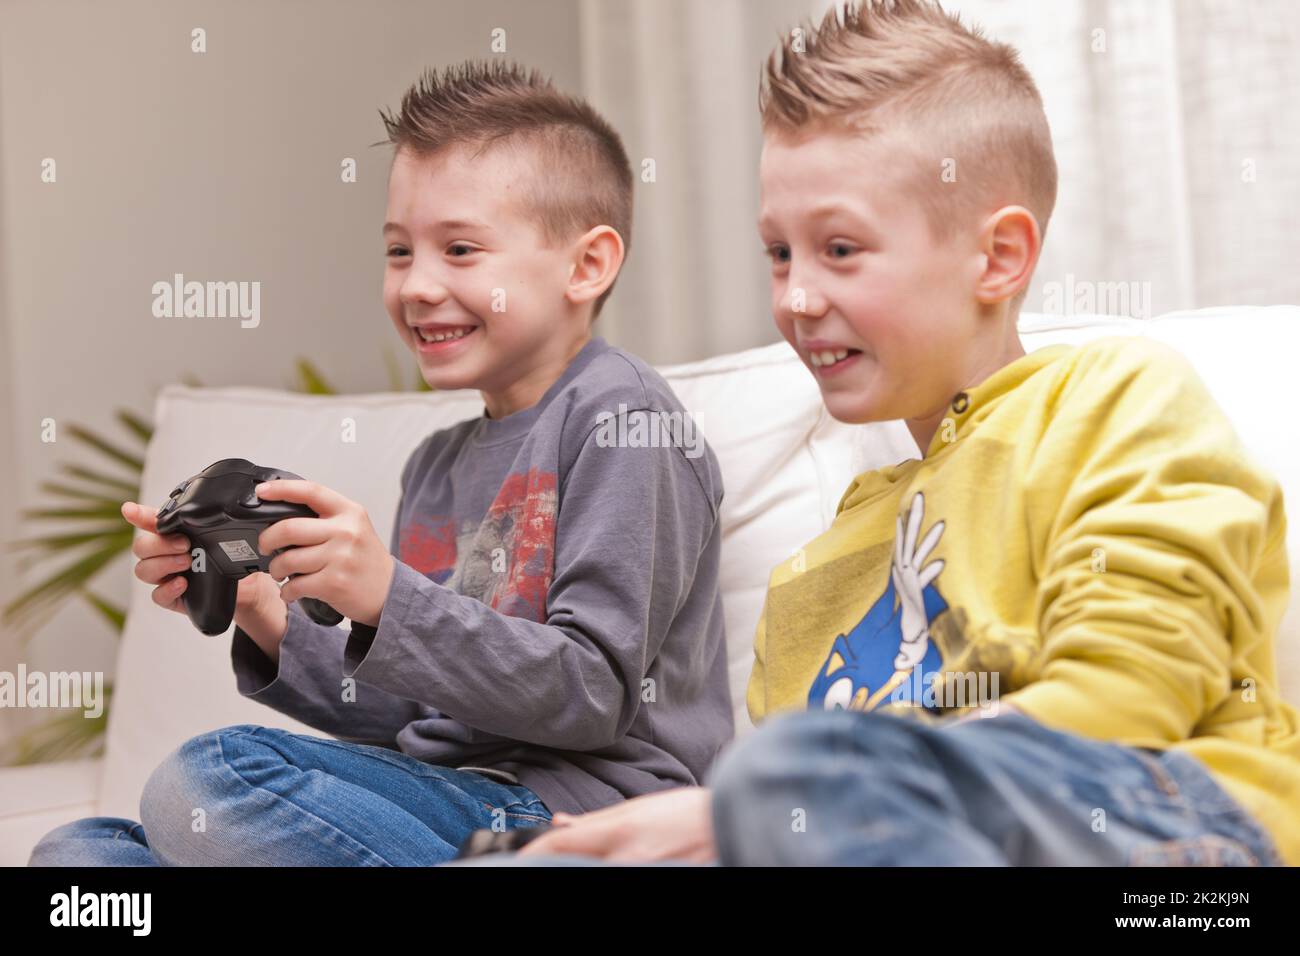 Kids playing video games Stock Photos, Royalty Free Kids playing